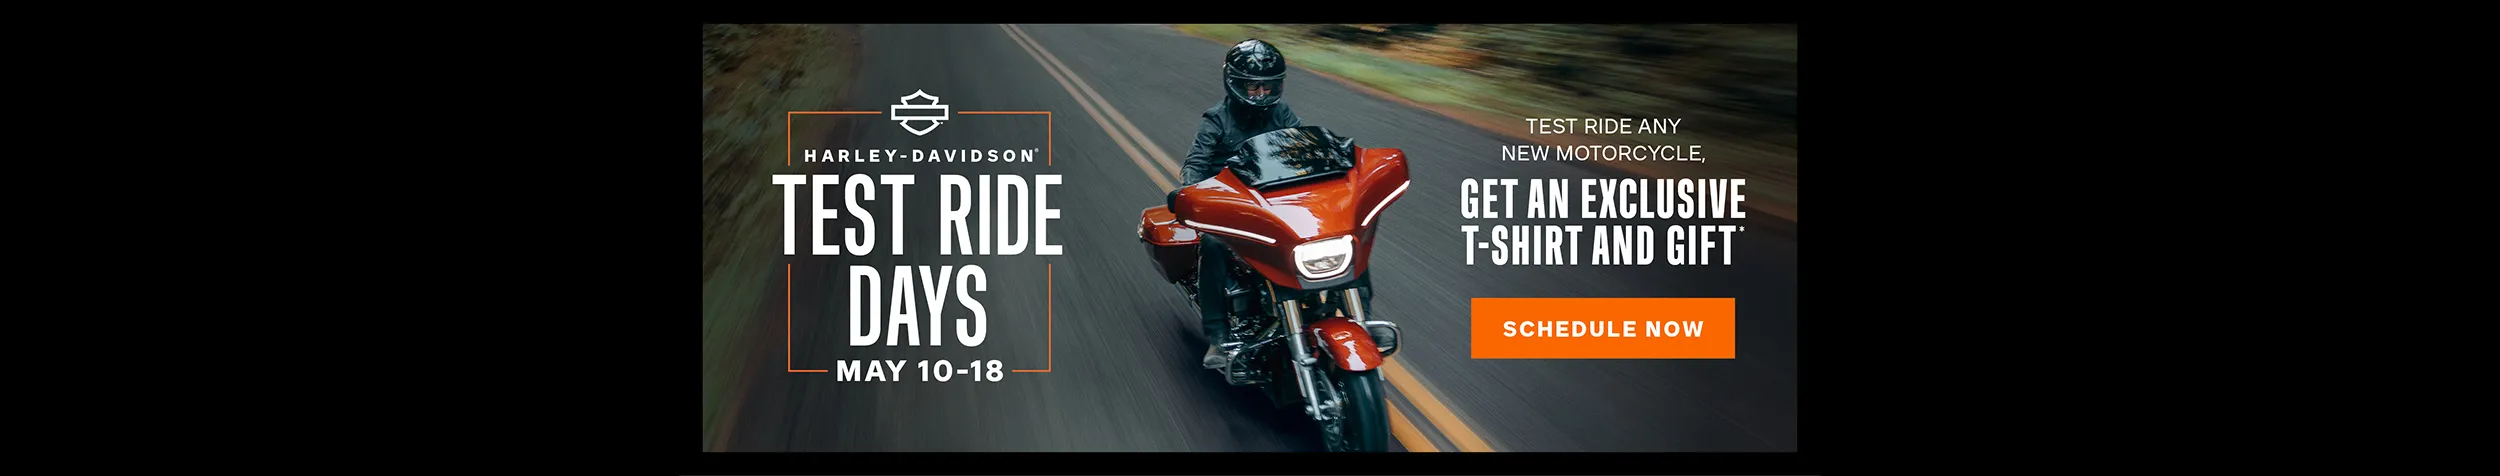 Harley-Davidson Test Ride Days